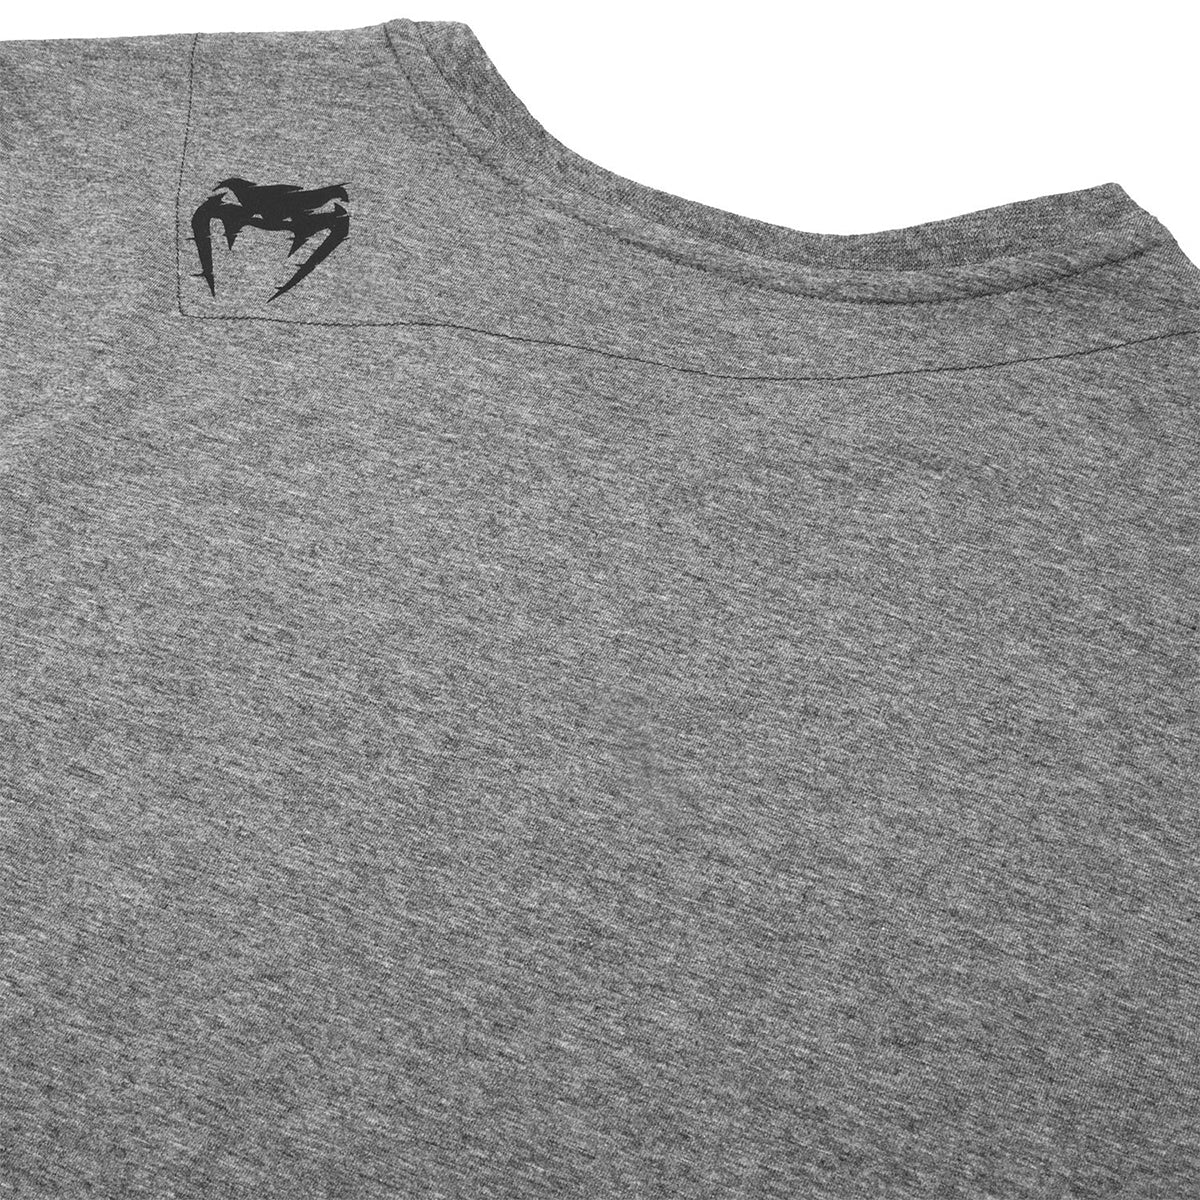 Venum Interference 2.0 Short Sleeve T-Shirt Venum